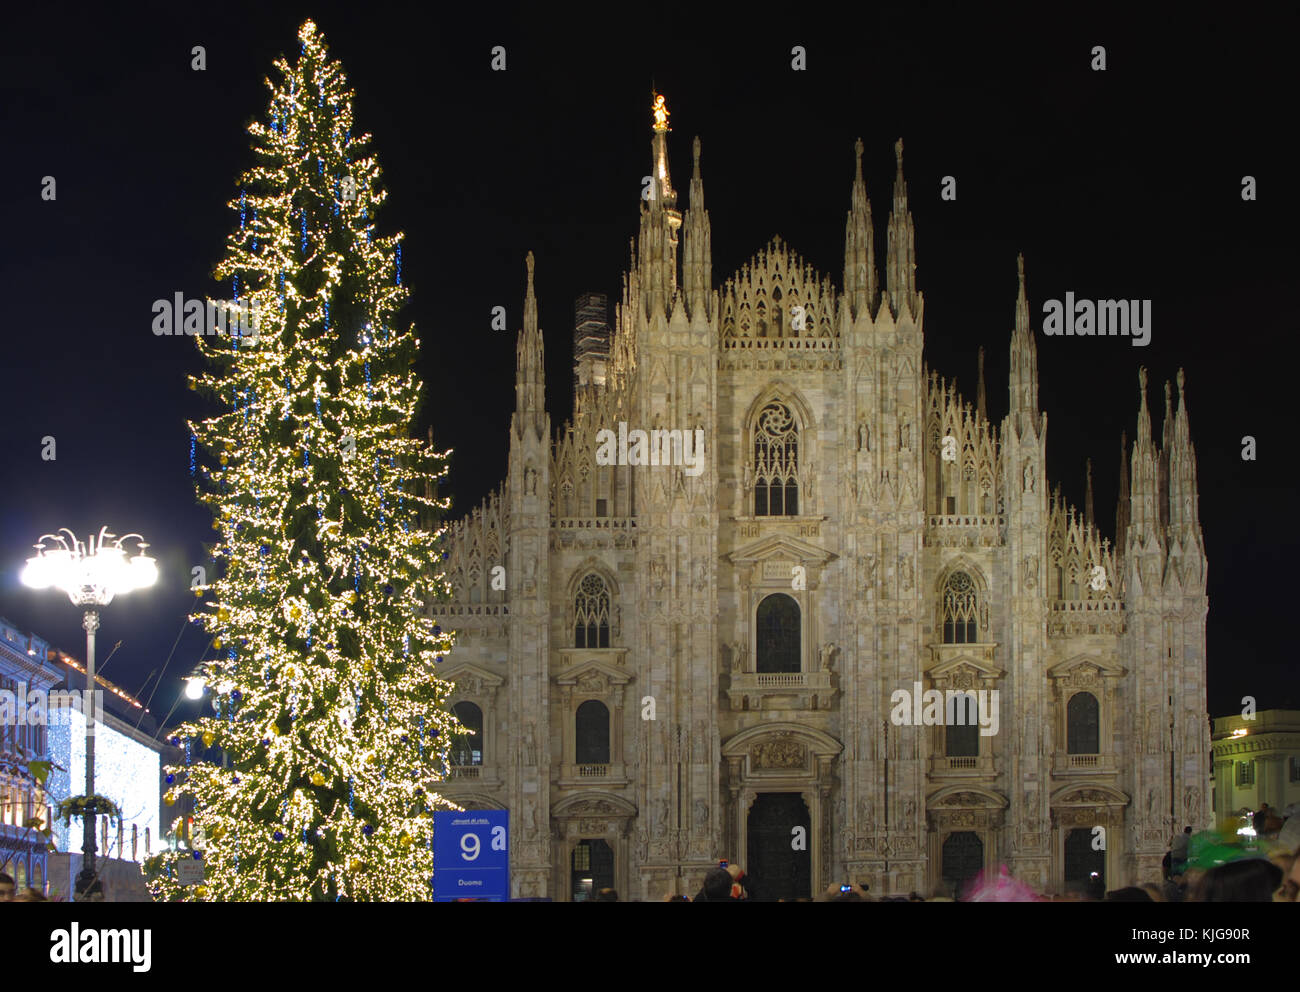 an illuminated Christmas tree in Duomo square in Milan, Italy Stock Photo